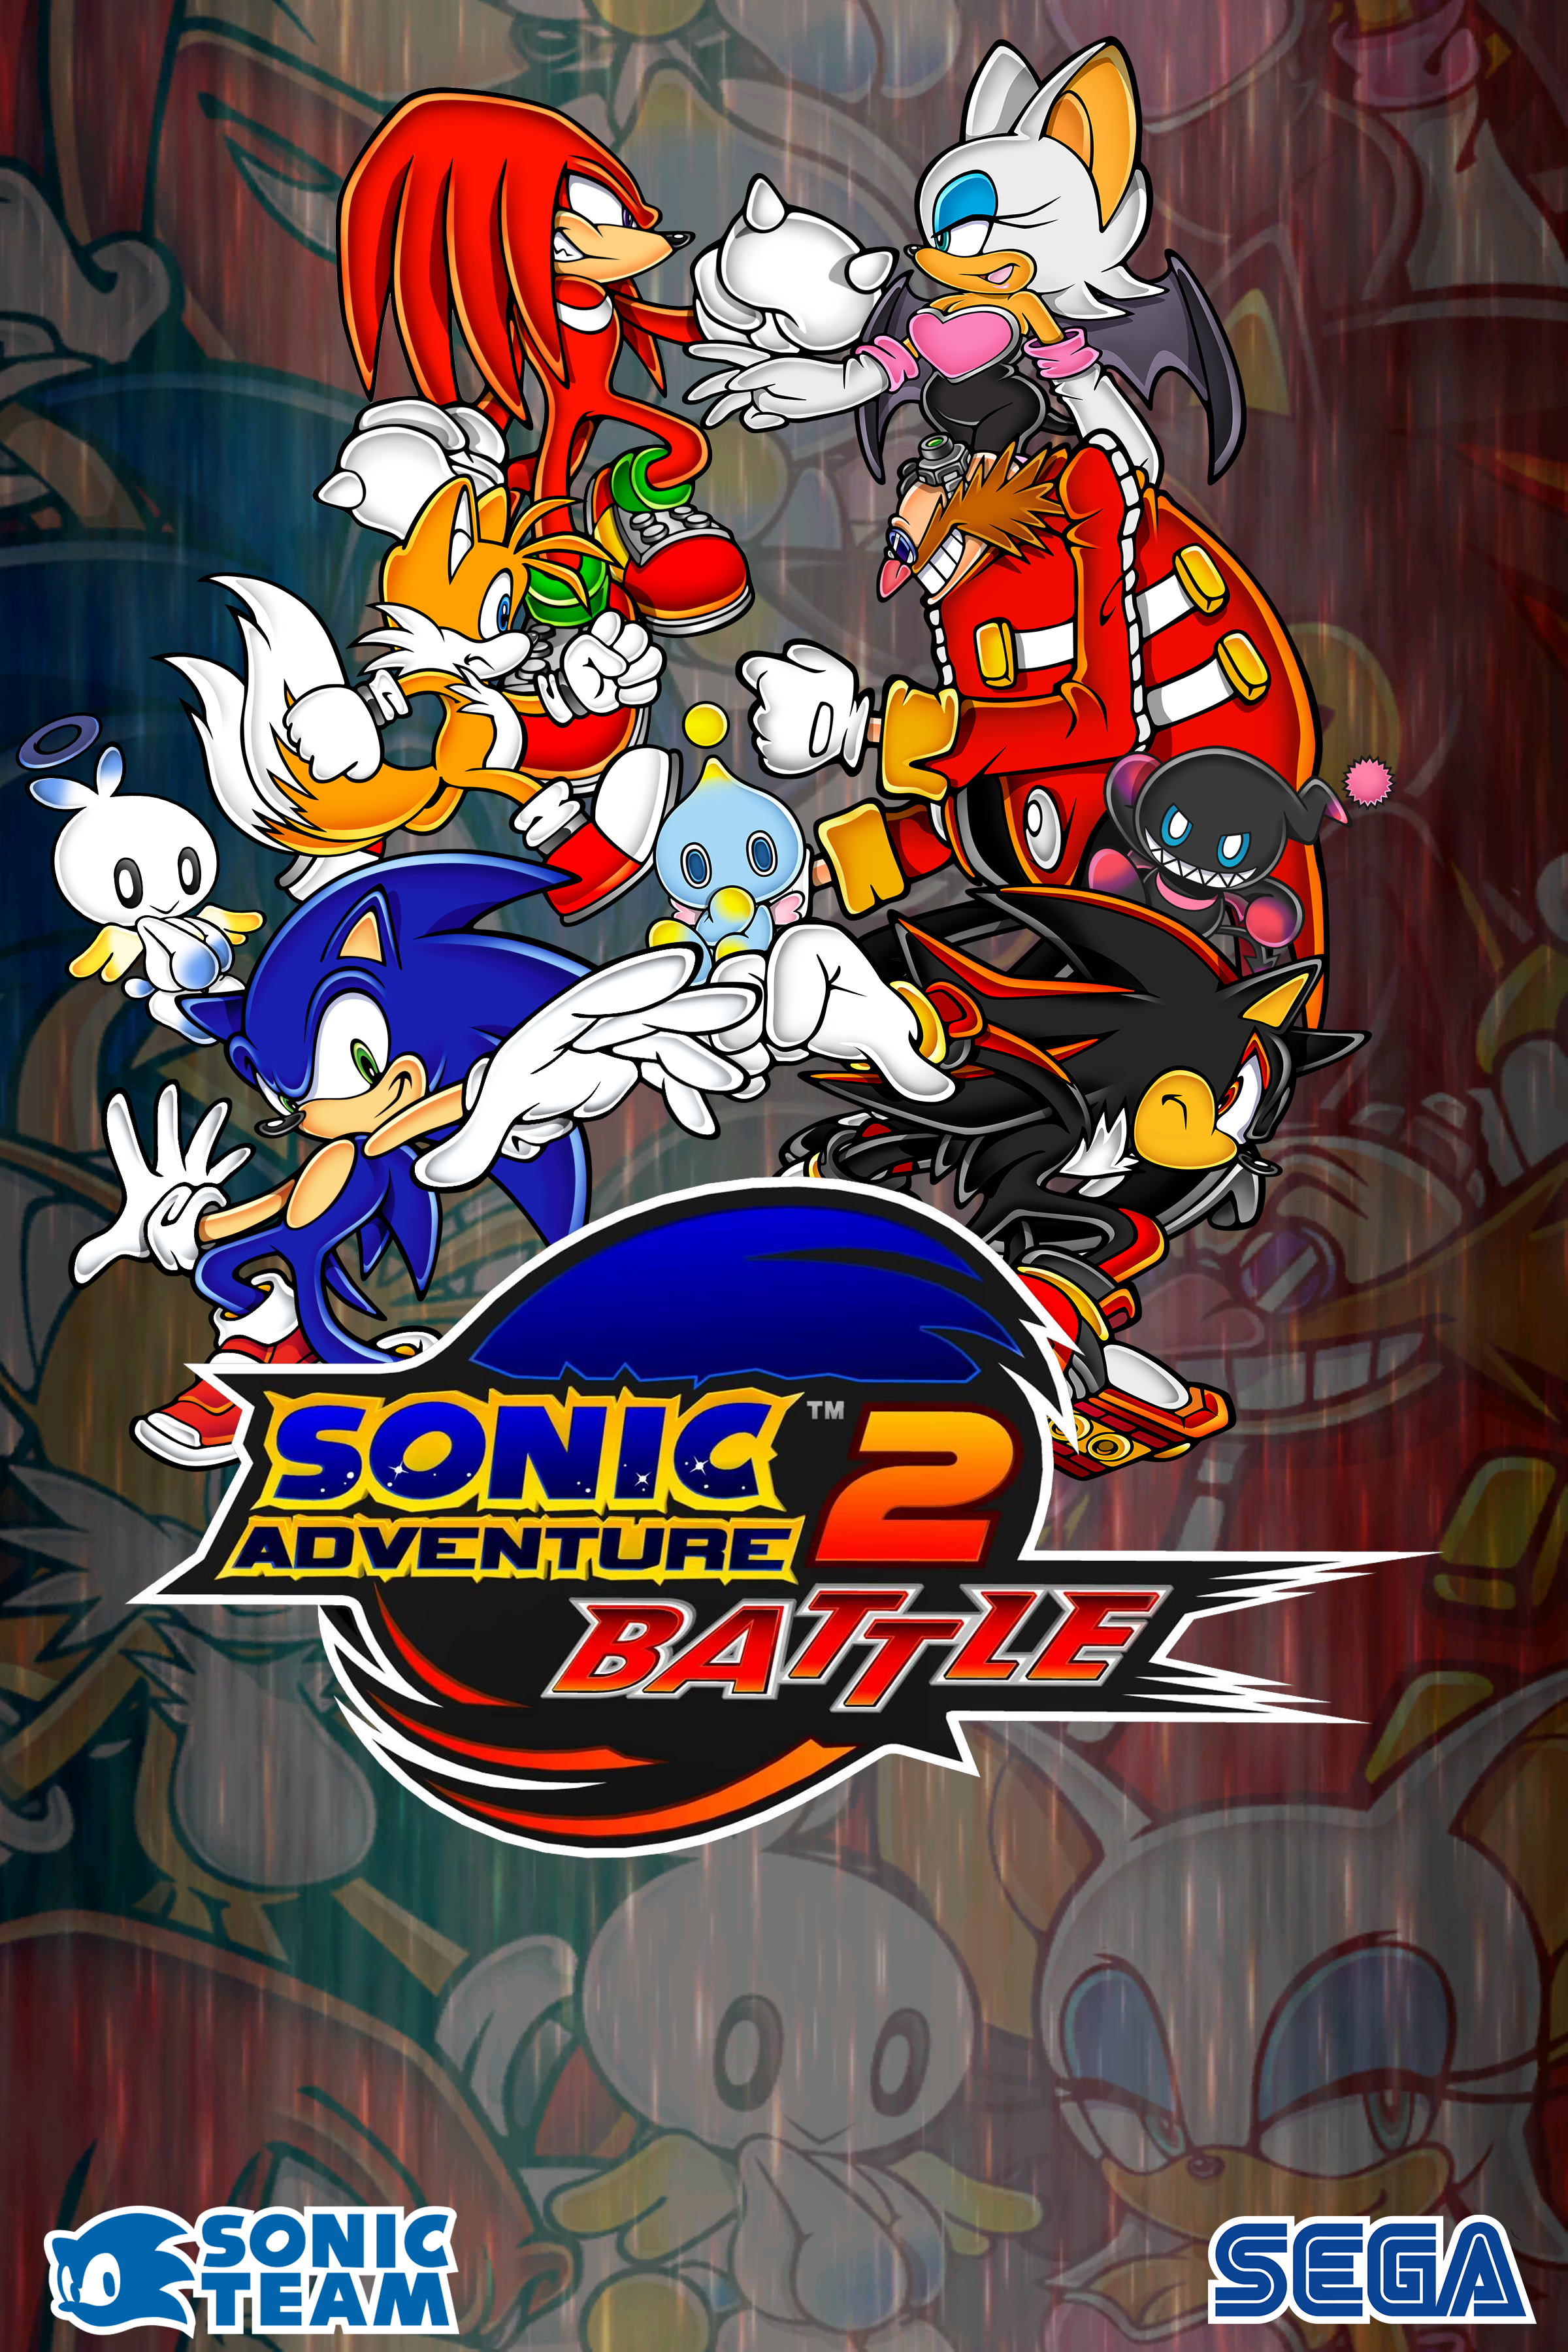 Sonic adventure 2 battle steam (118) фото